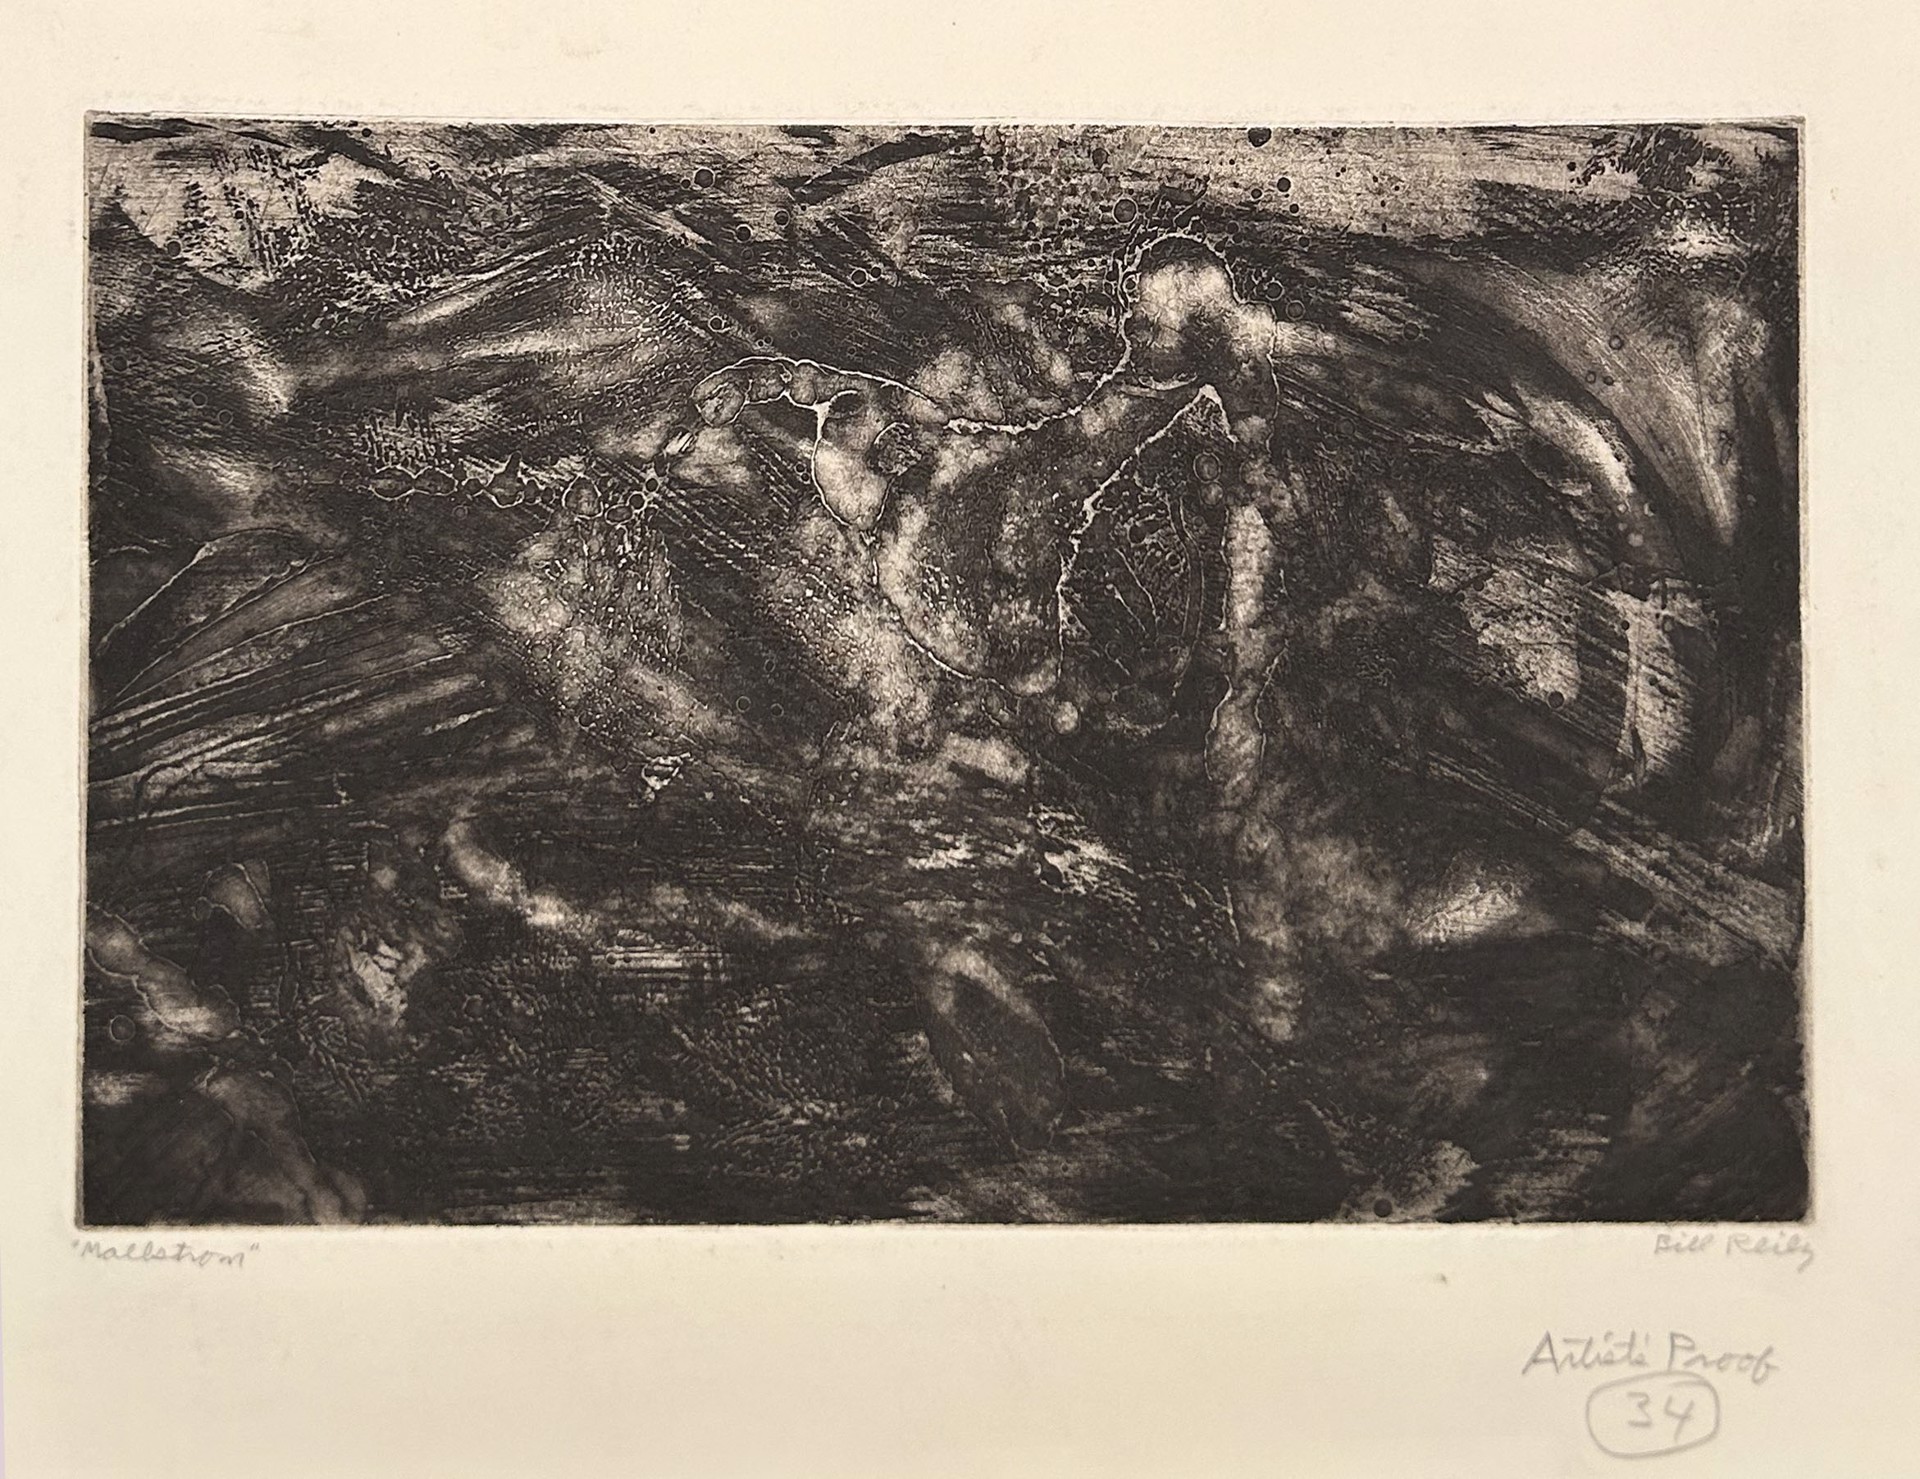 34a. Malestrom (Artist's proof) by Bill Reily - Prints